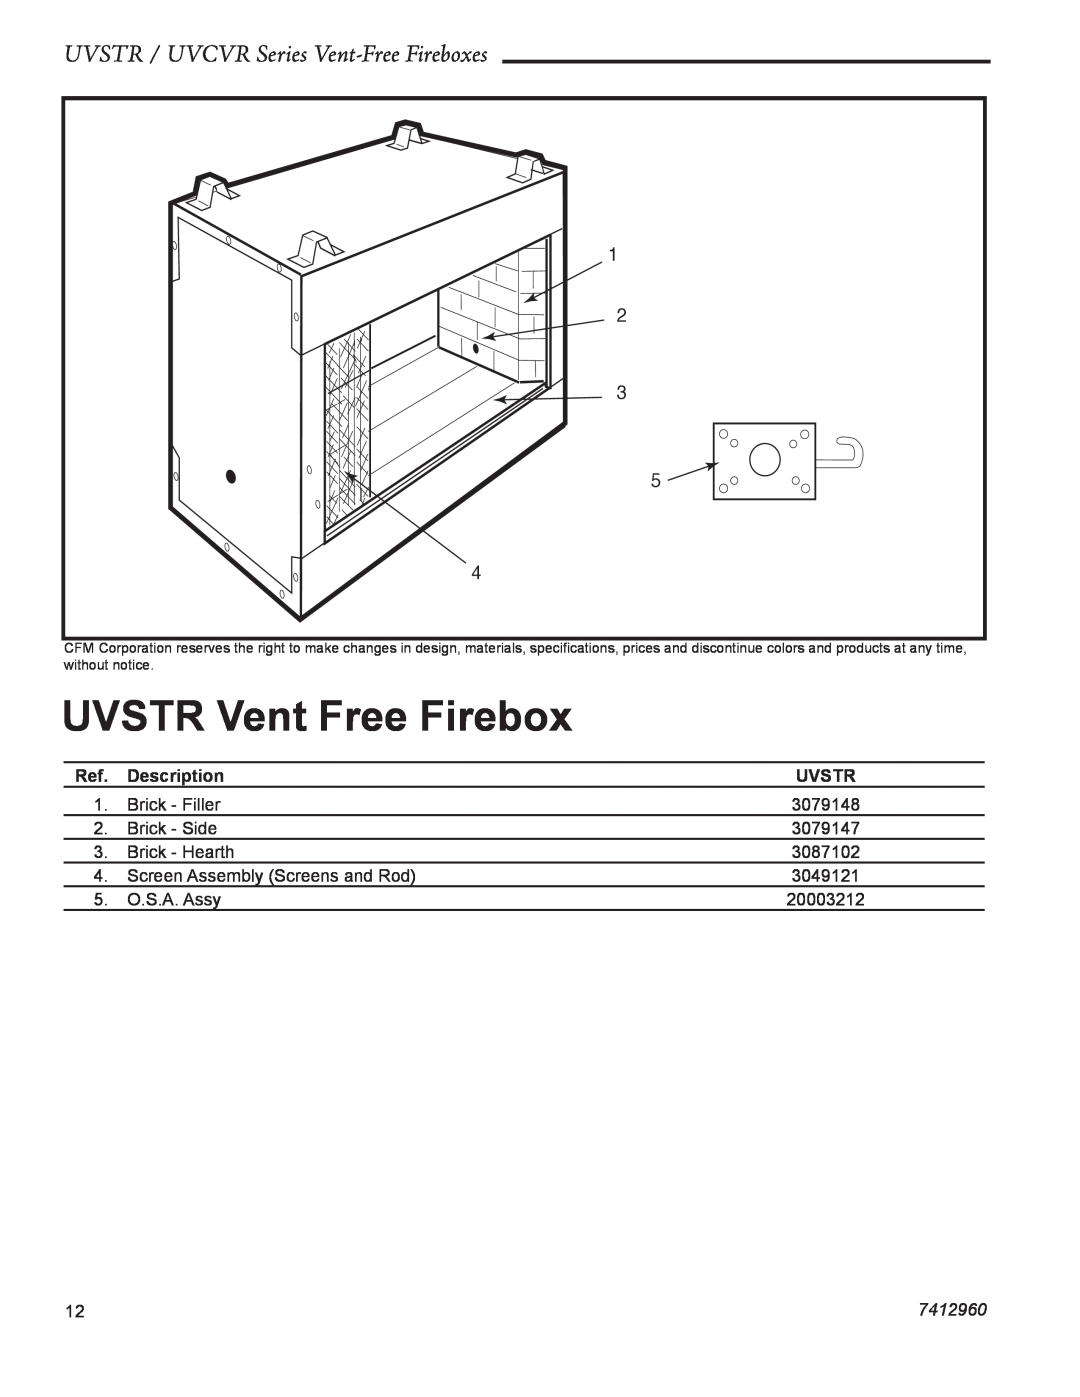 CFM UVSTR36, UVCVR36 dimensions UVSTR Vent Free Firebox, UVSTR / UVCVR Series Vent-Free Fireboxes, 7412960 